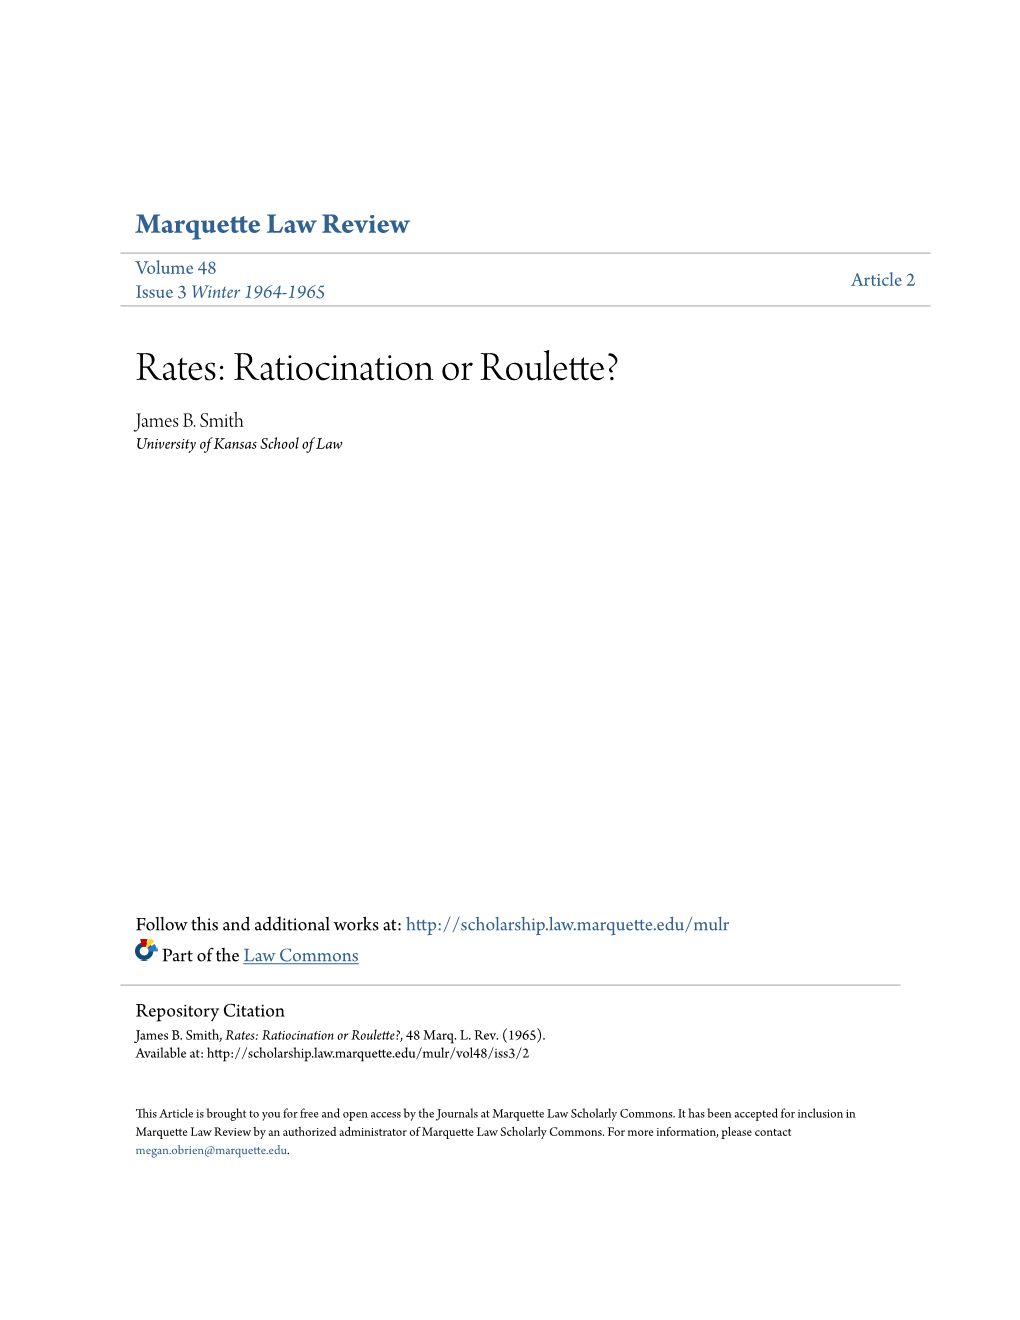 Rates: Ratiocination Or Roulette? James B